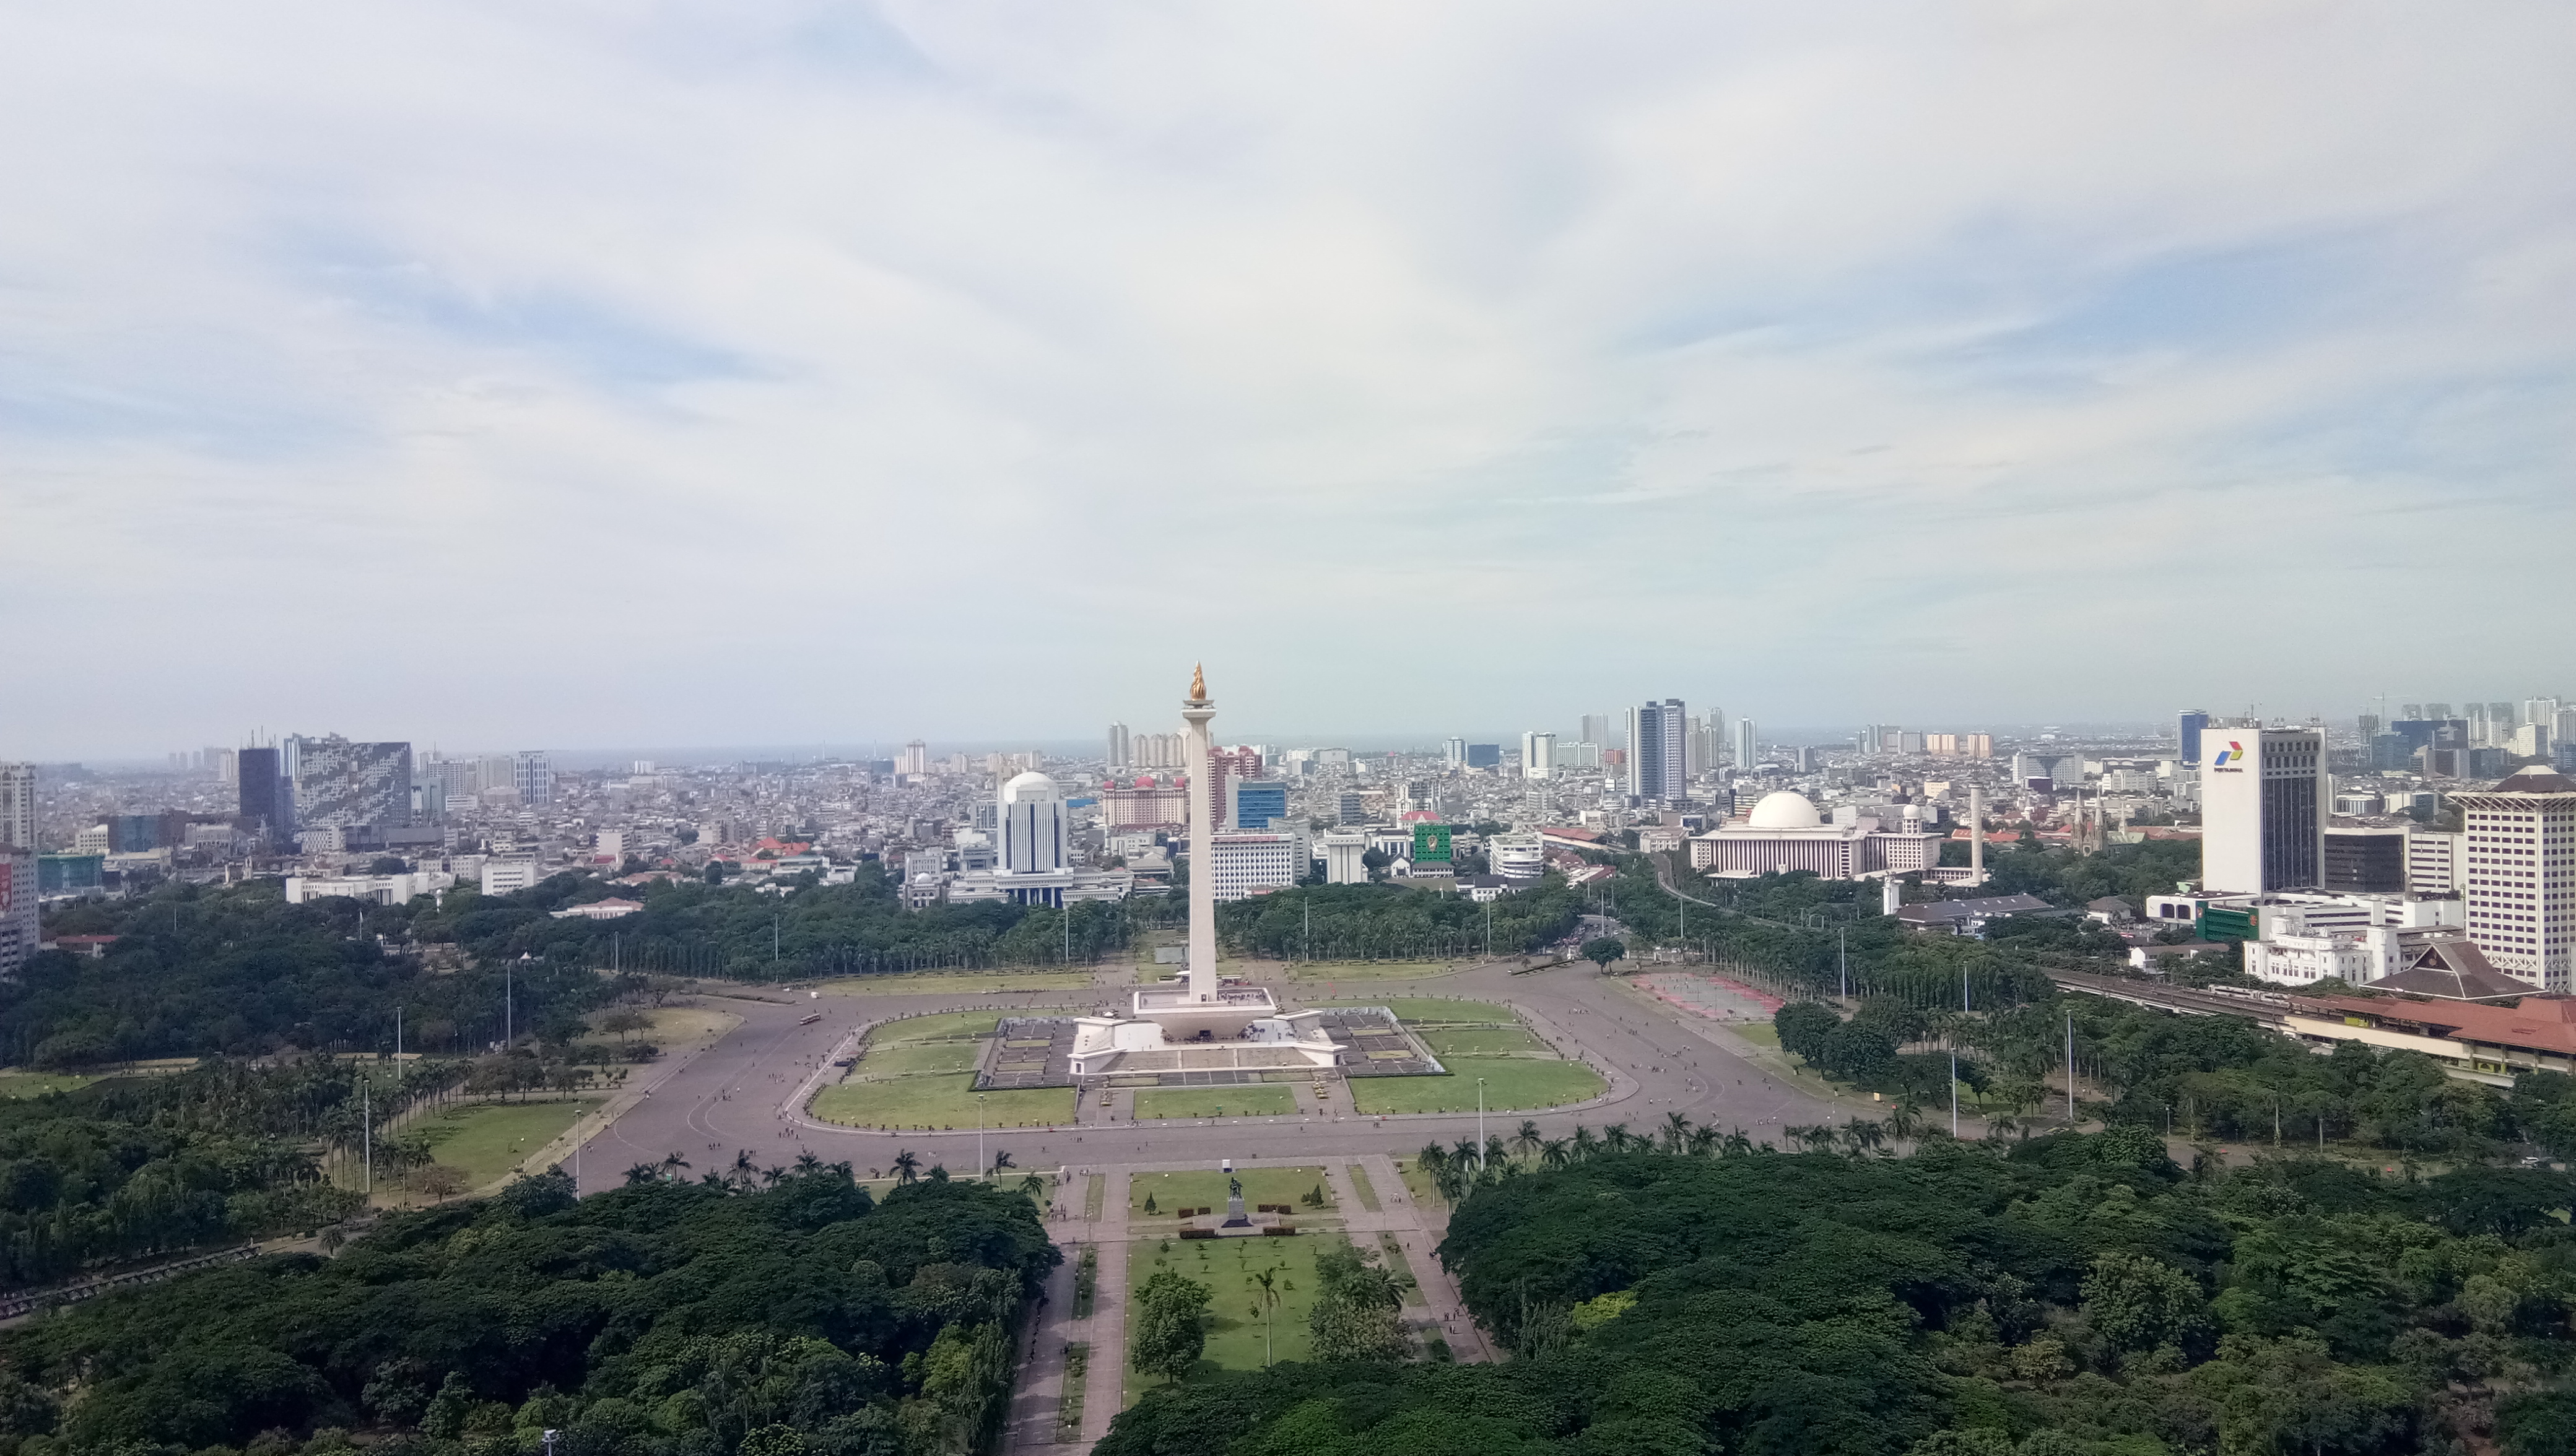 Indonesia capital of Capital of